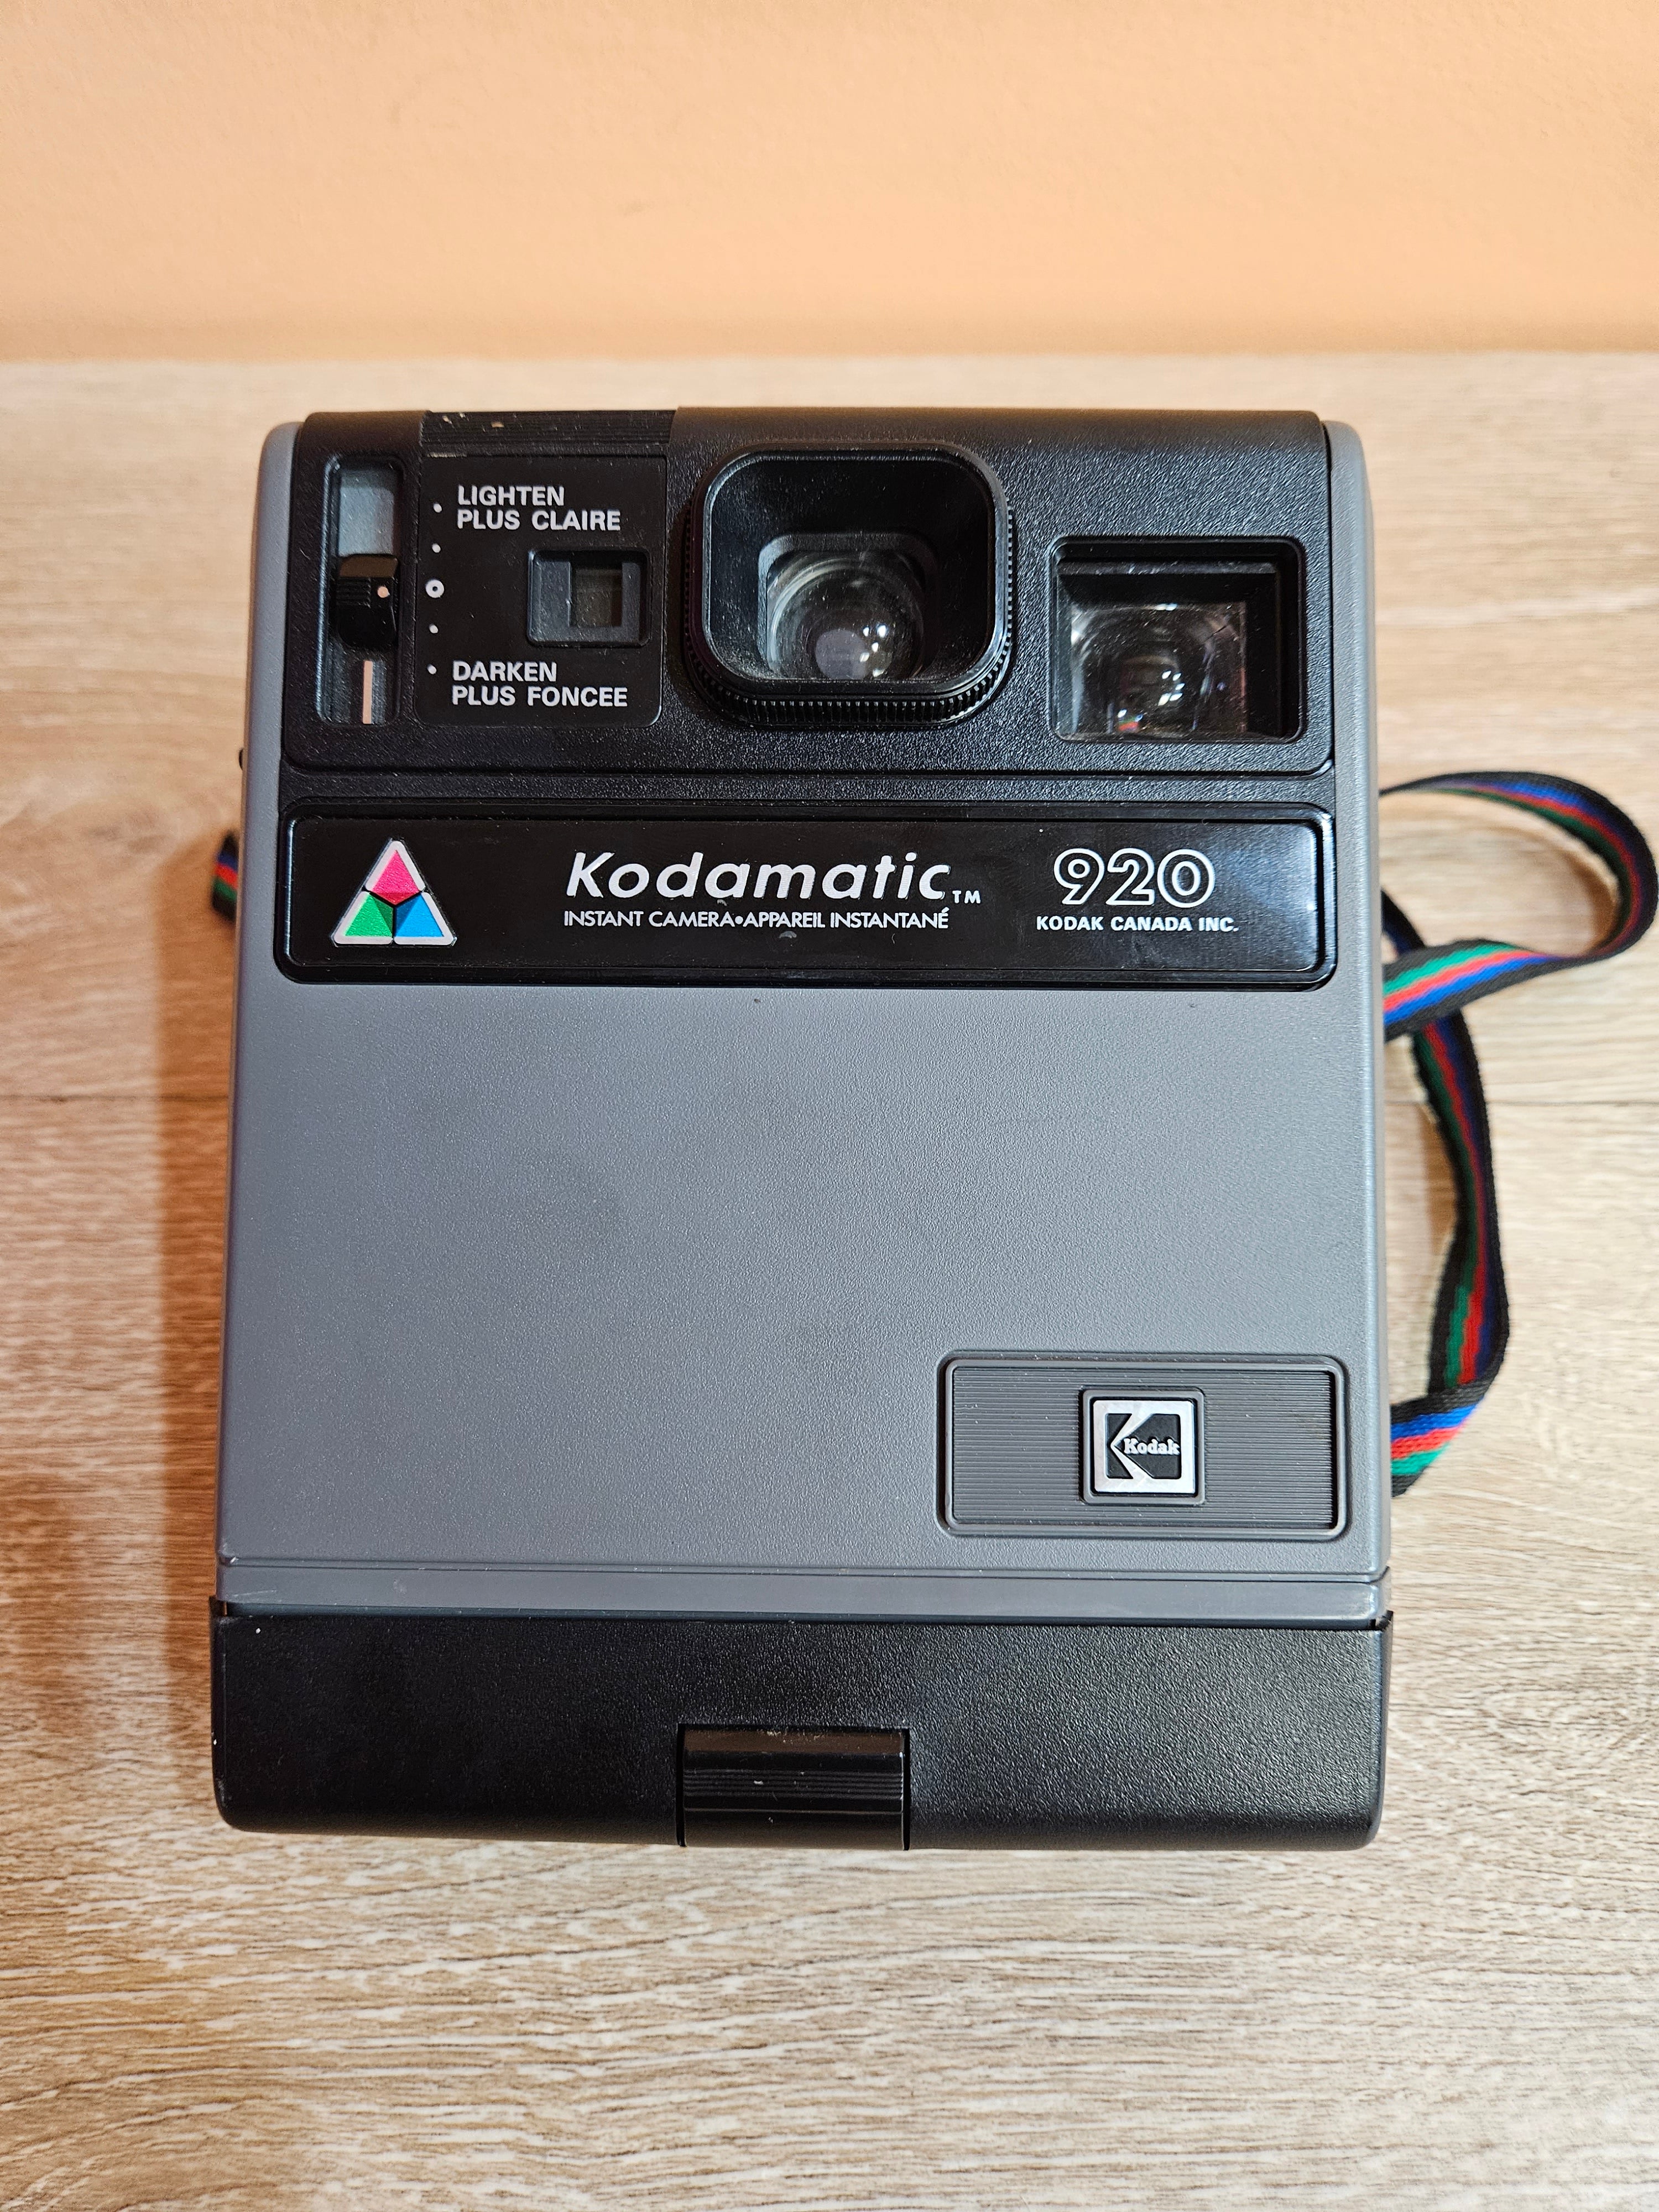 Kodamatic 920 Instant Film Camera